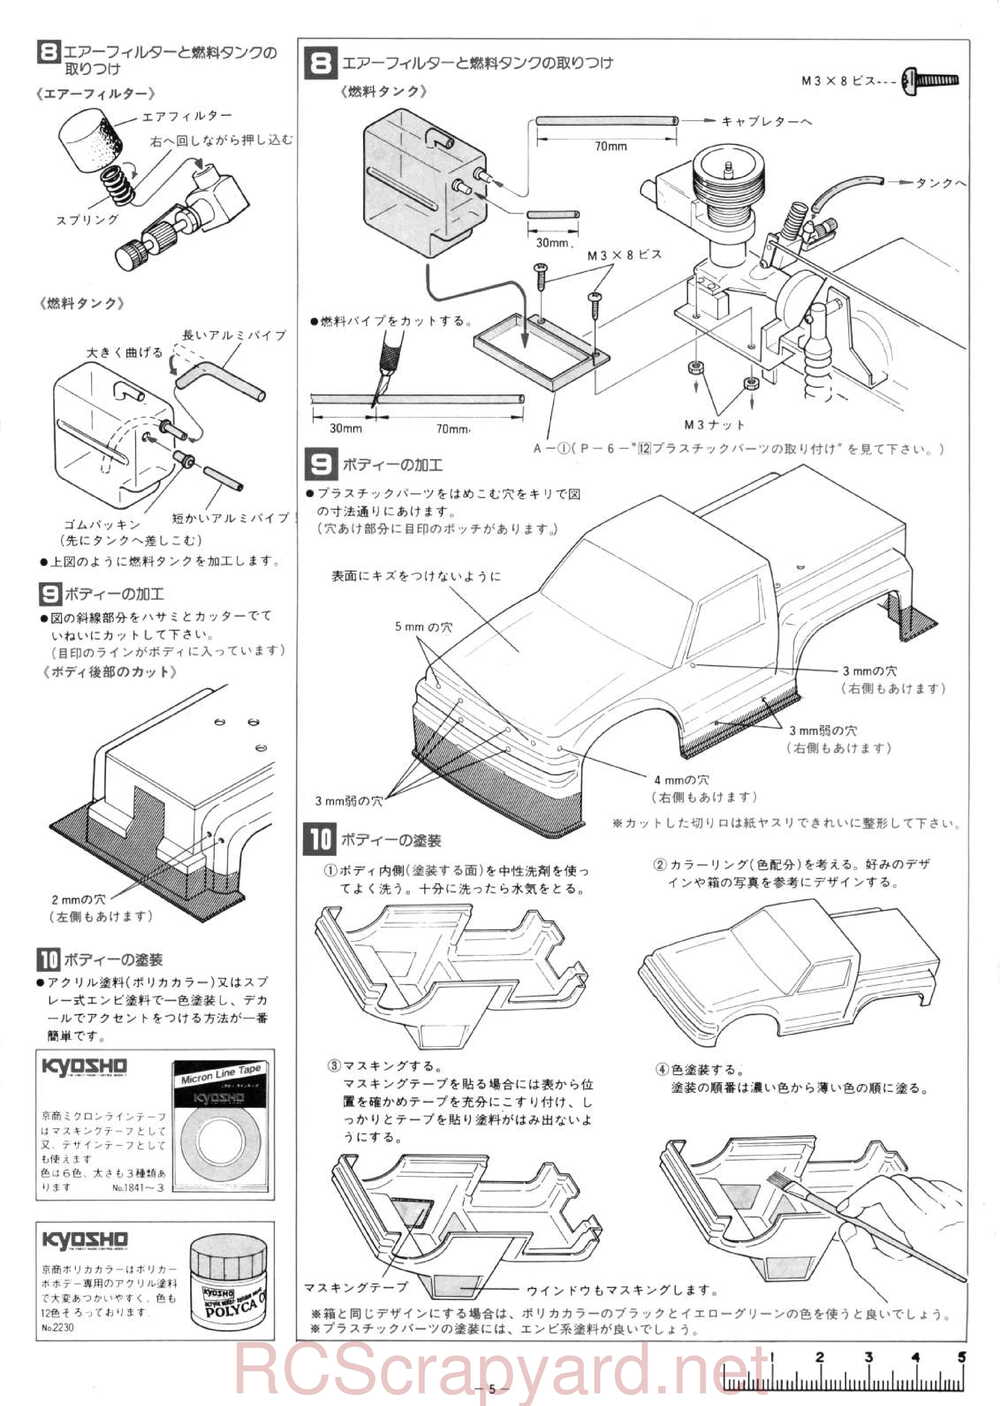 Kyosho - 3085 - Minitz-06 - Datsun-Stepside - Manual - Page 05